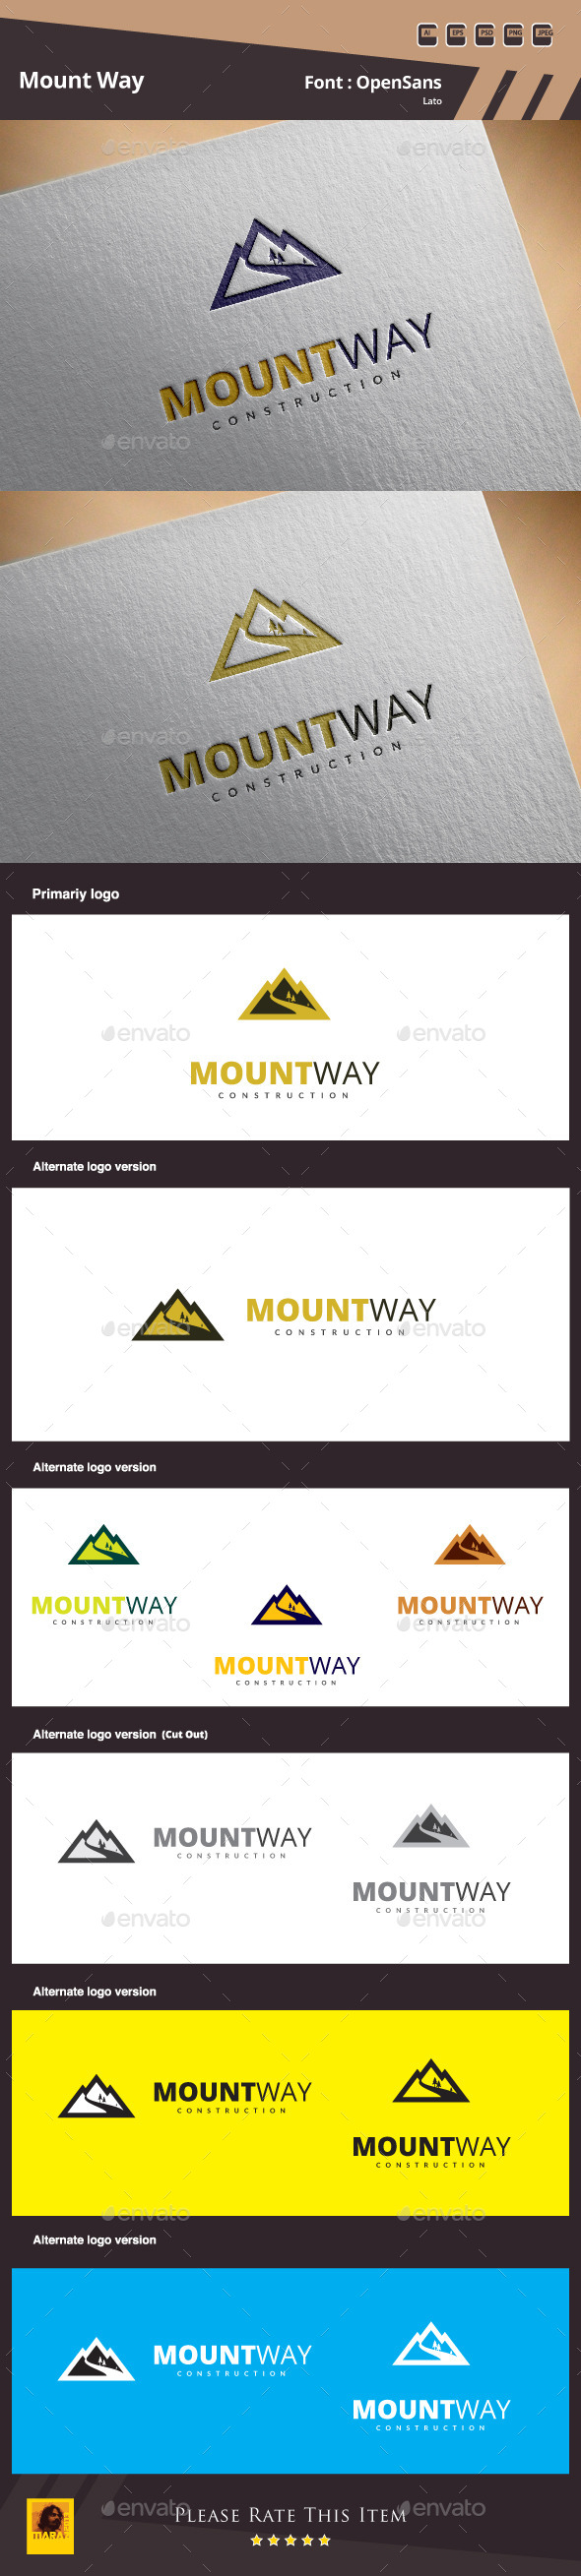 Mount Way Construction